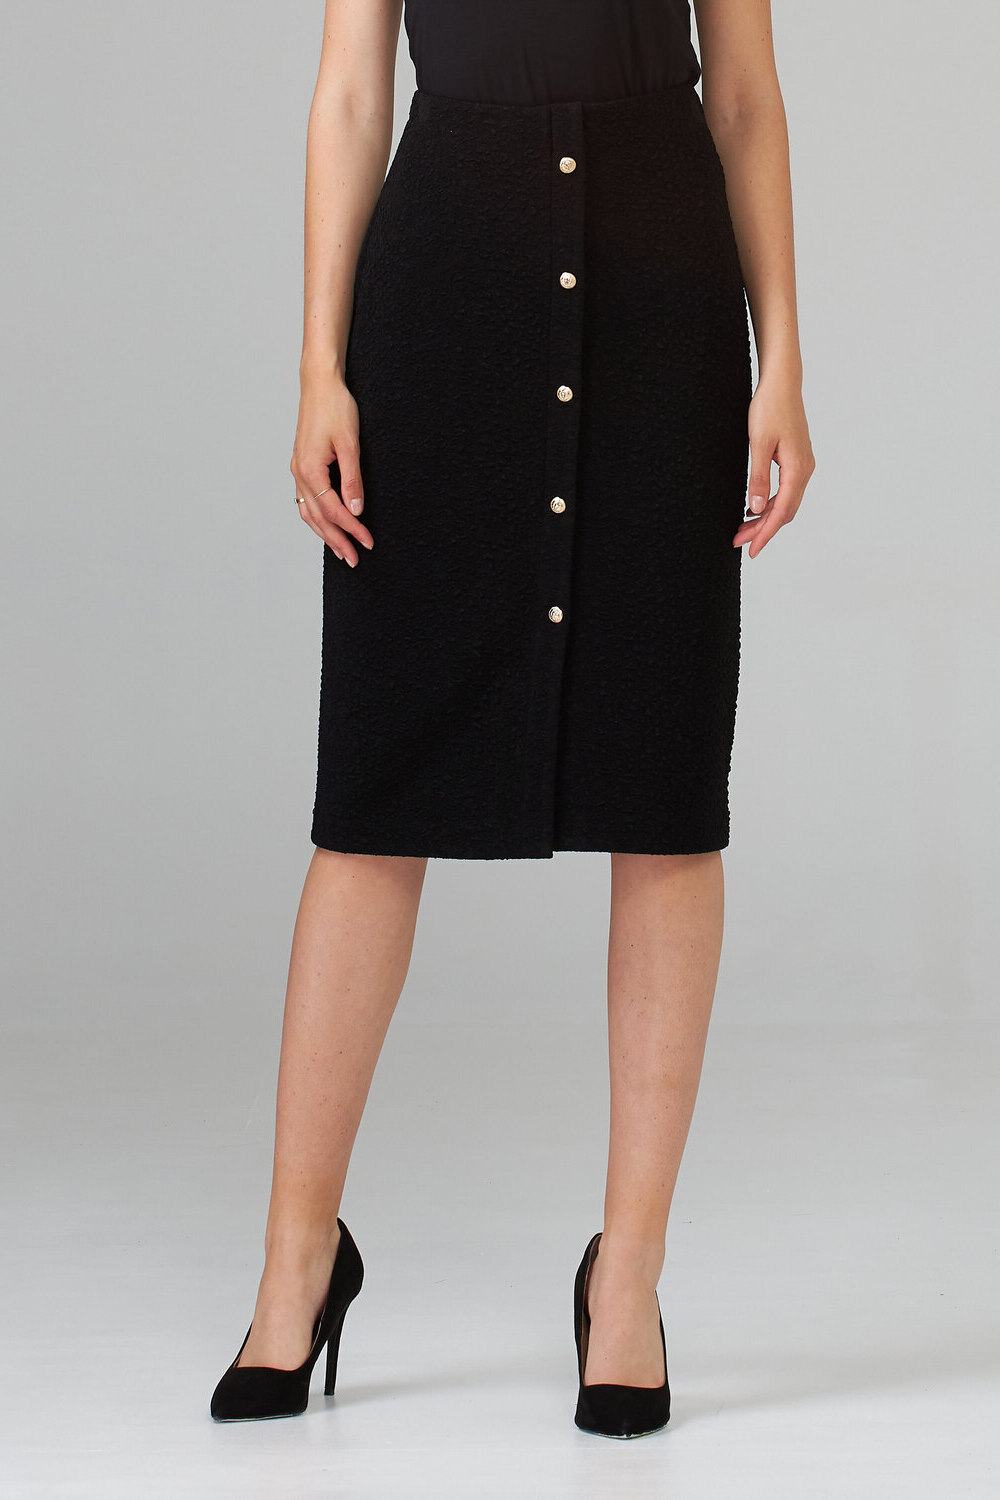 Joseph Ribkoff Skirt Style 203707. Black